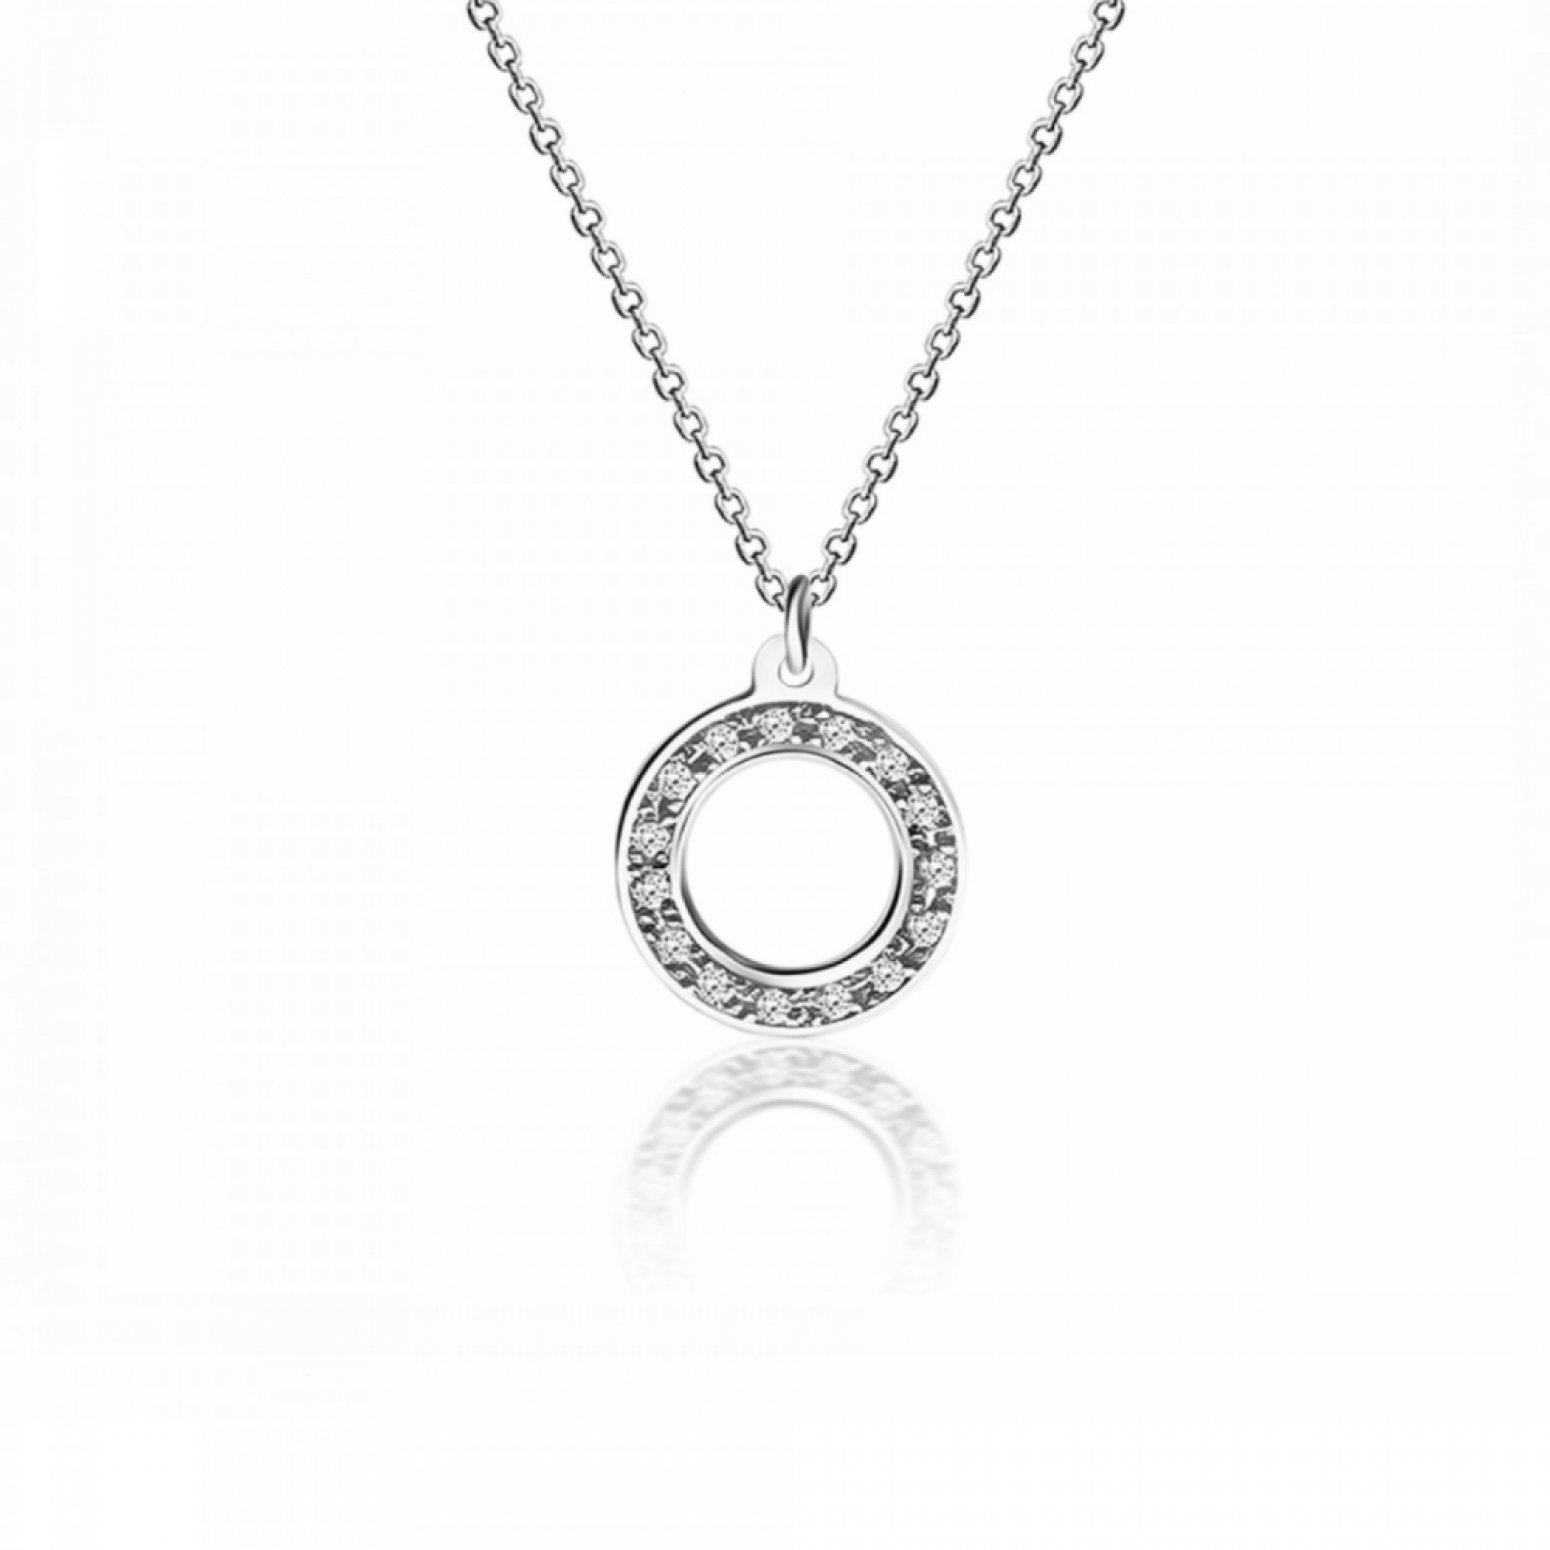 Round necklace, Κ14 white gold with diamonds 0.06ct, VS2, H ko5289 NECKLACES Κοσμηματα - chrilia.gr